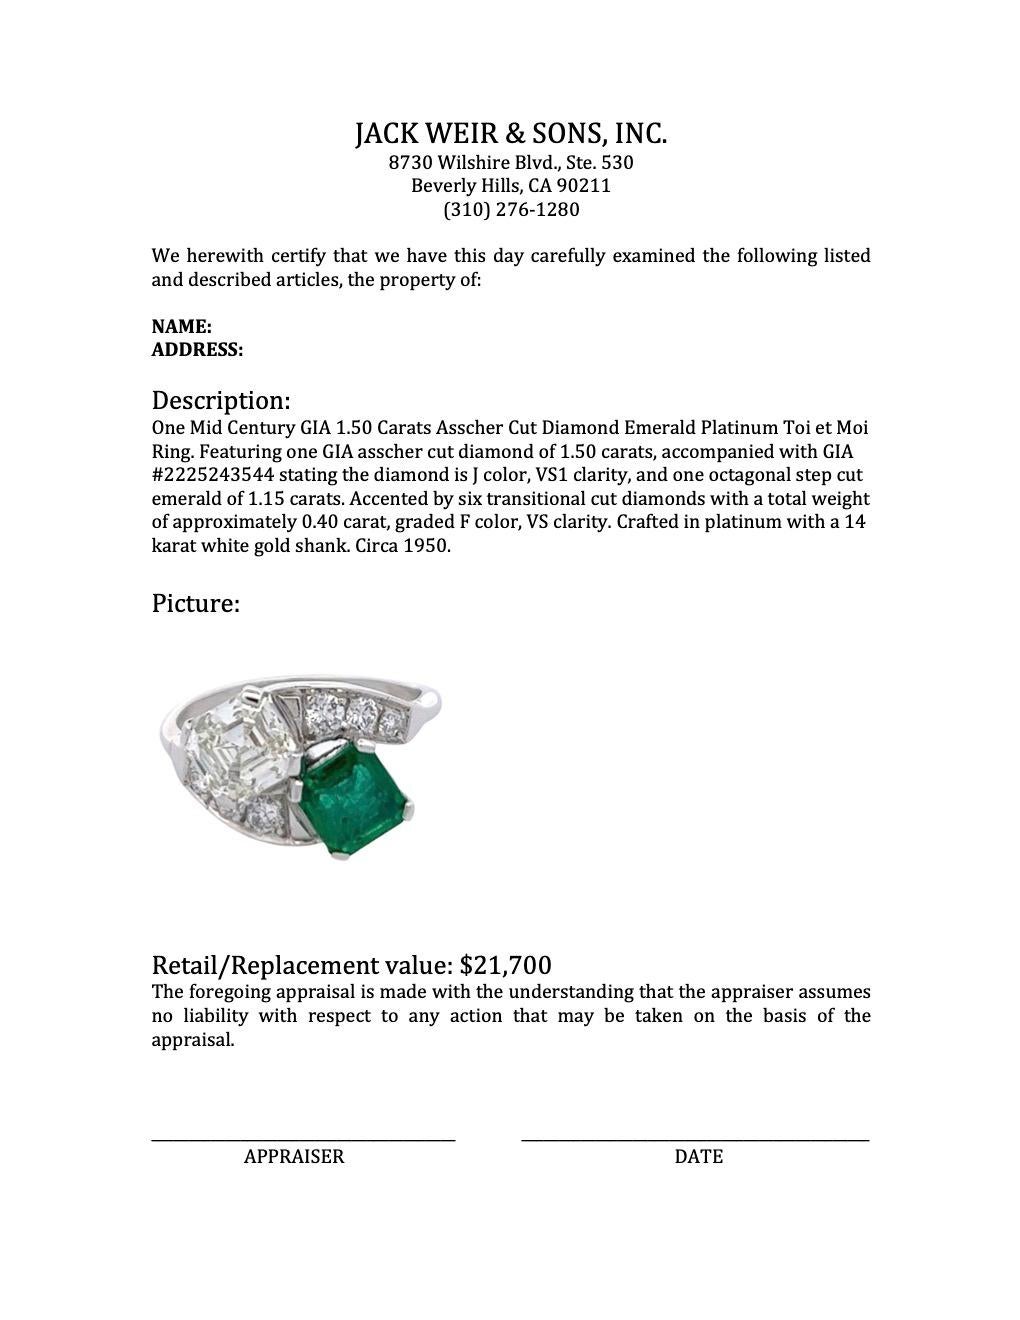 Midcentury GIA 1.50 Carats Asscher Cut Diamond Emerald Platinum Toi et Moi Ring 4